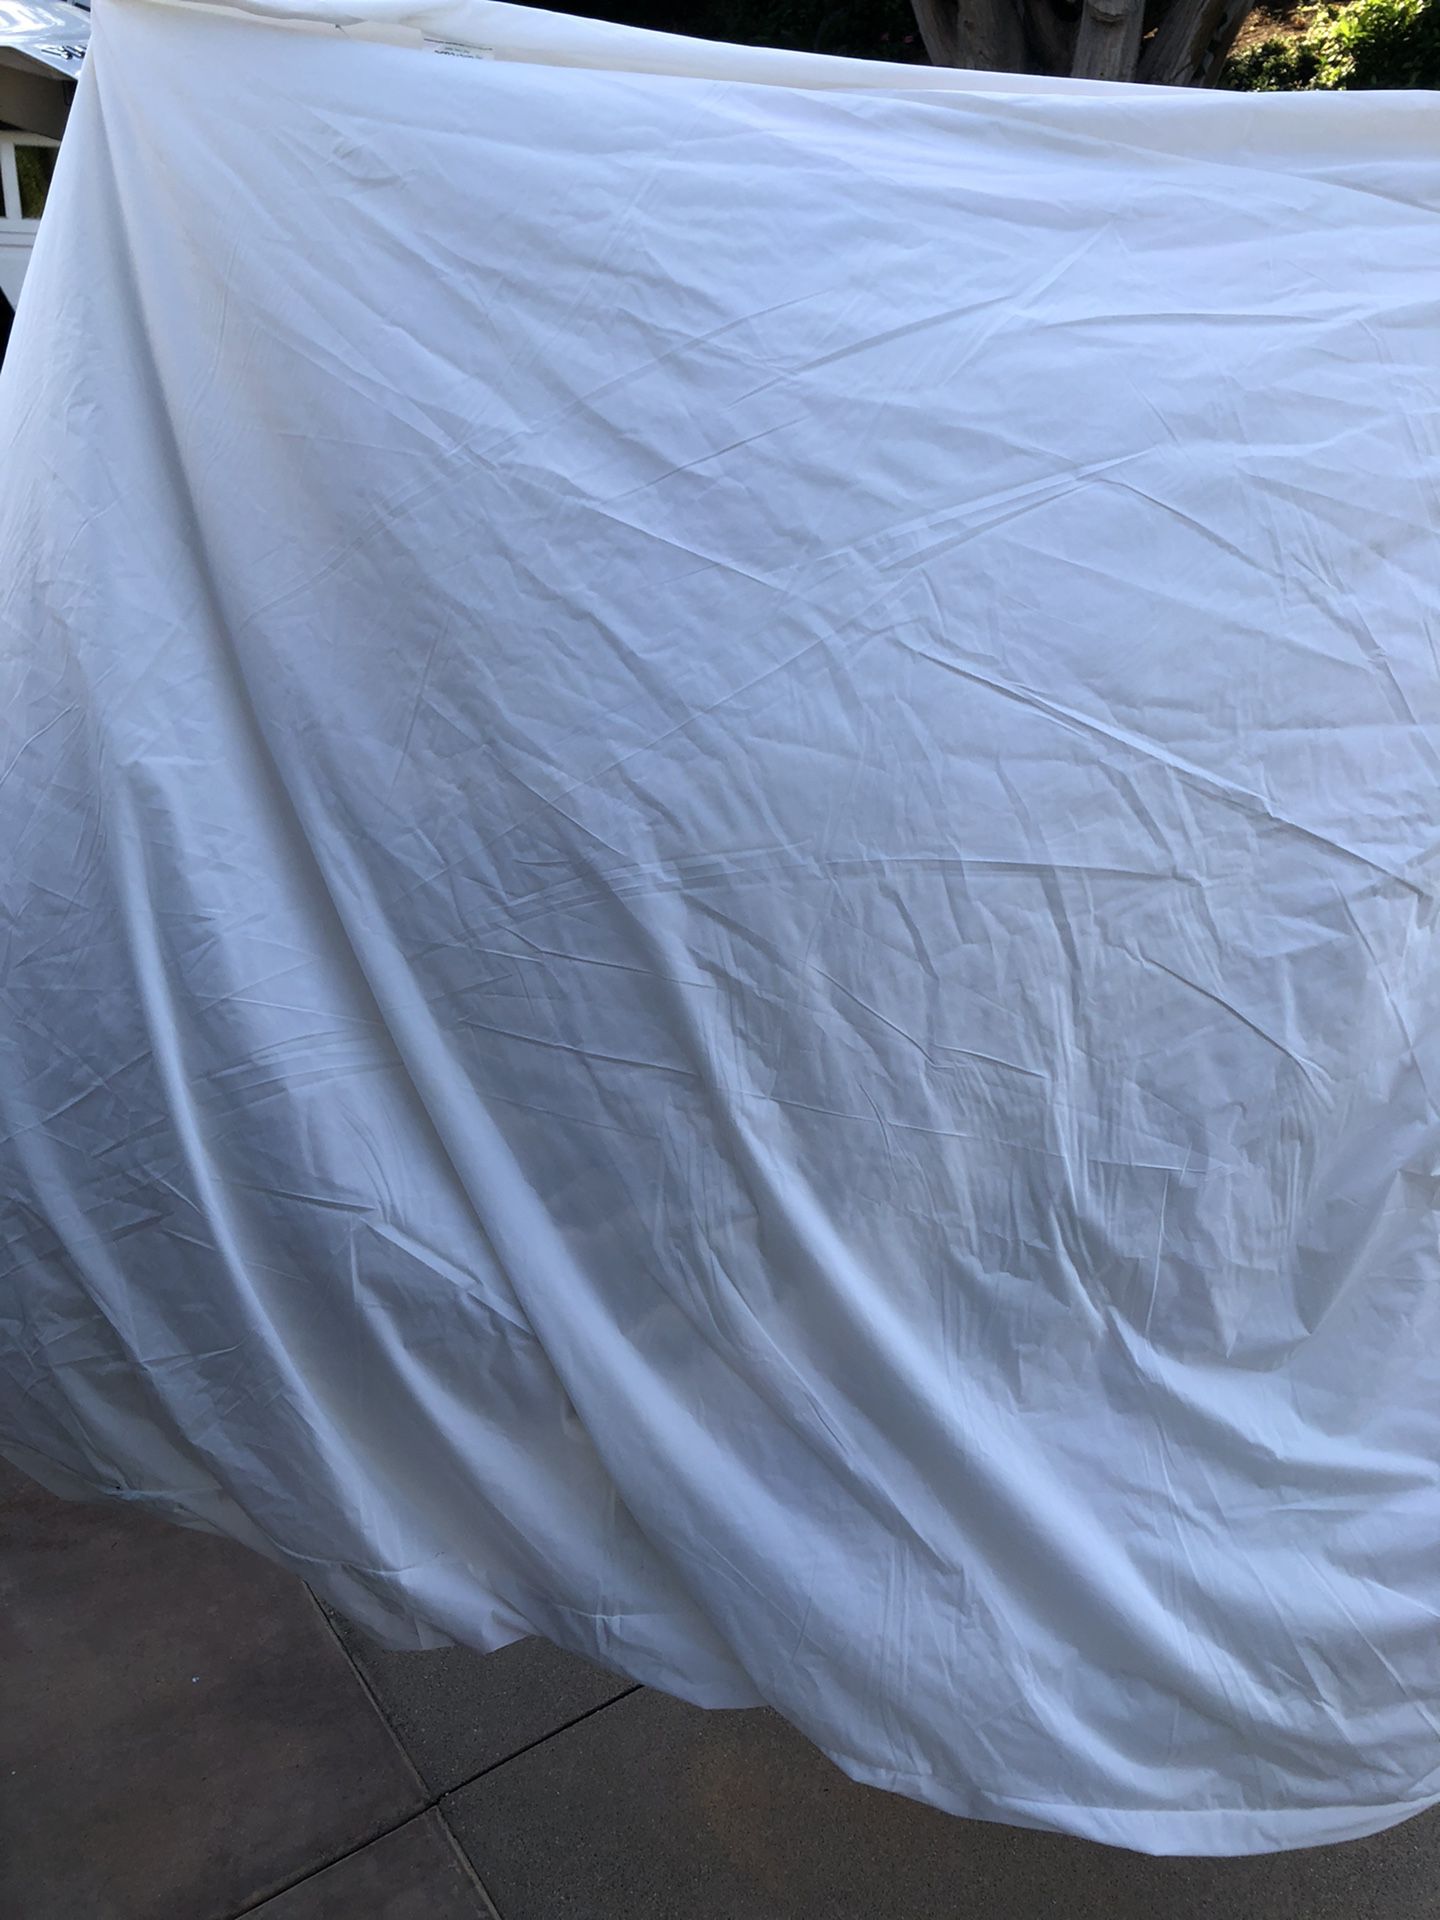 Full size mattress cover - waterproof